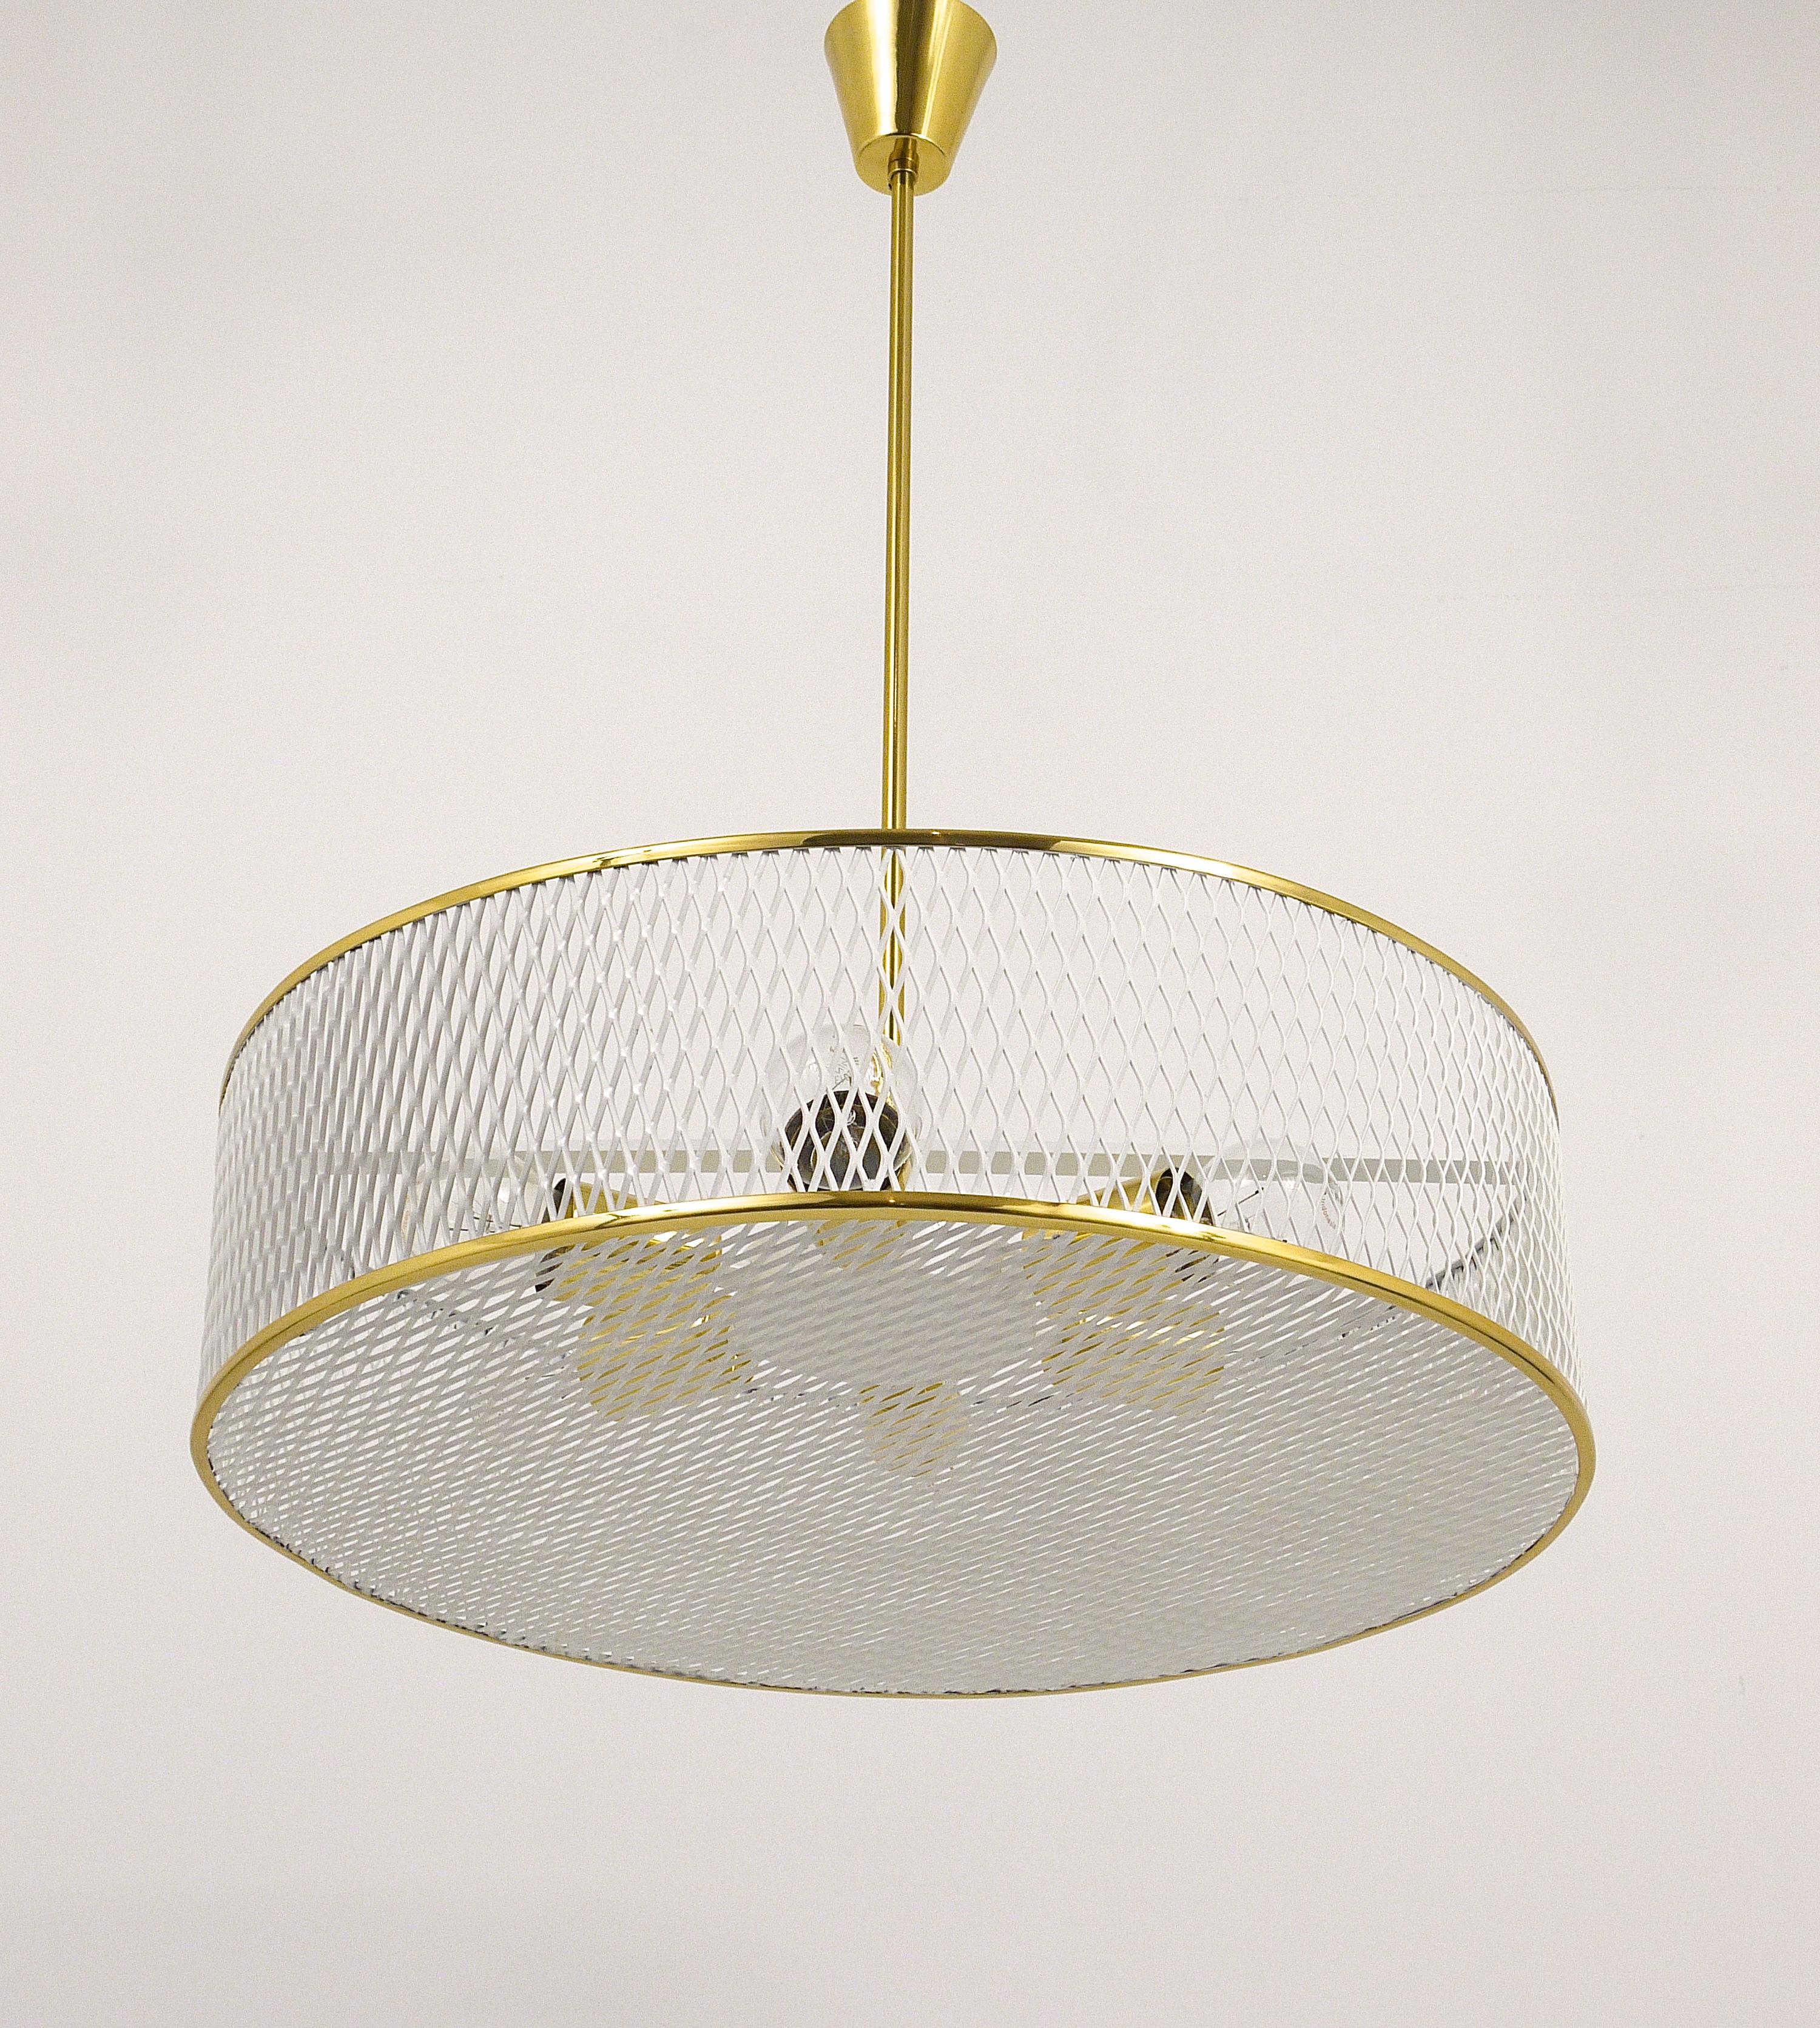 French Mathieu Matégot Style Midcentury Brass Chandelier Pendant Lamp, France, 1950s For Sale